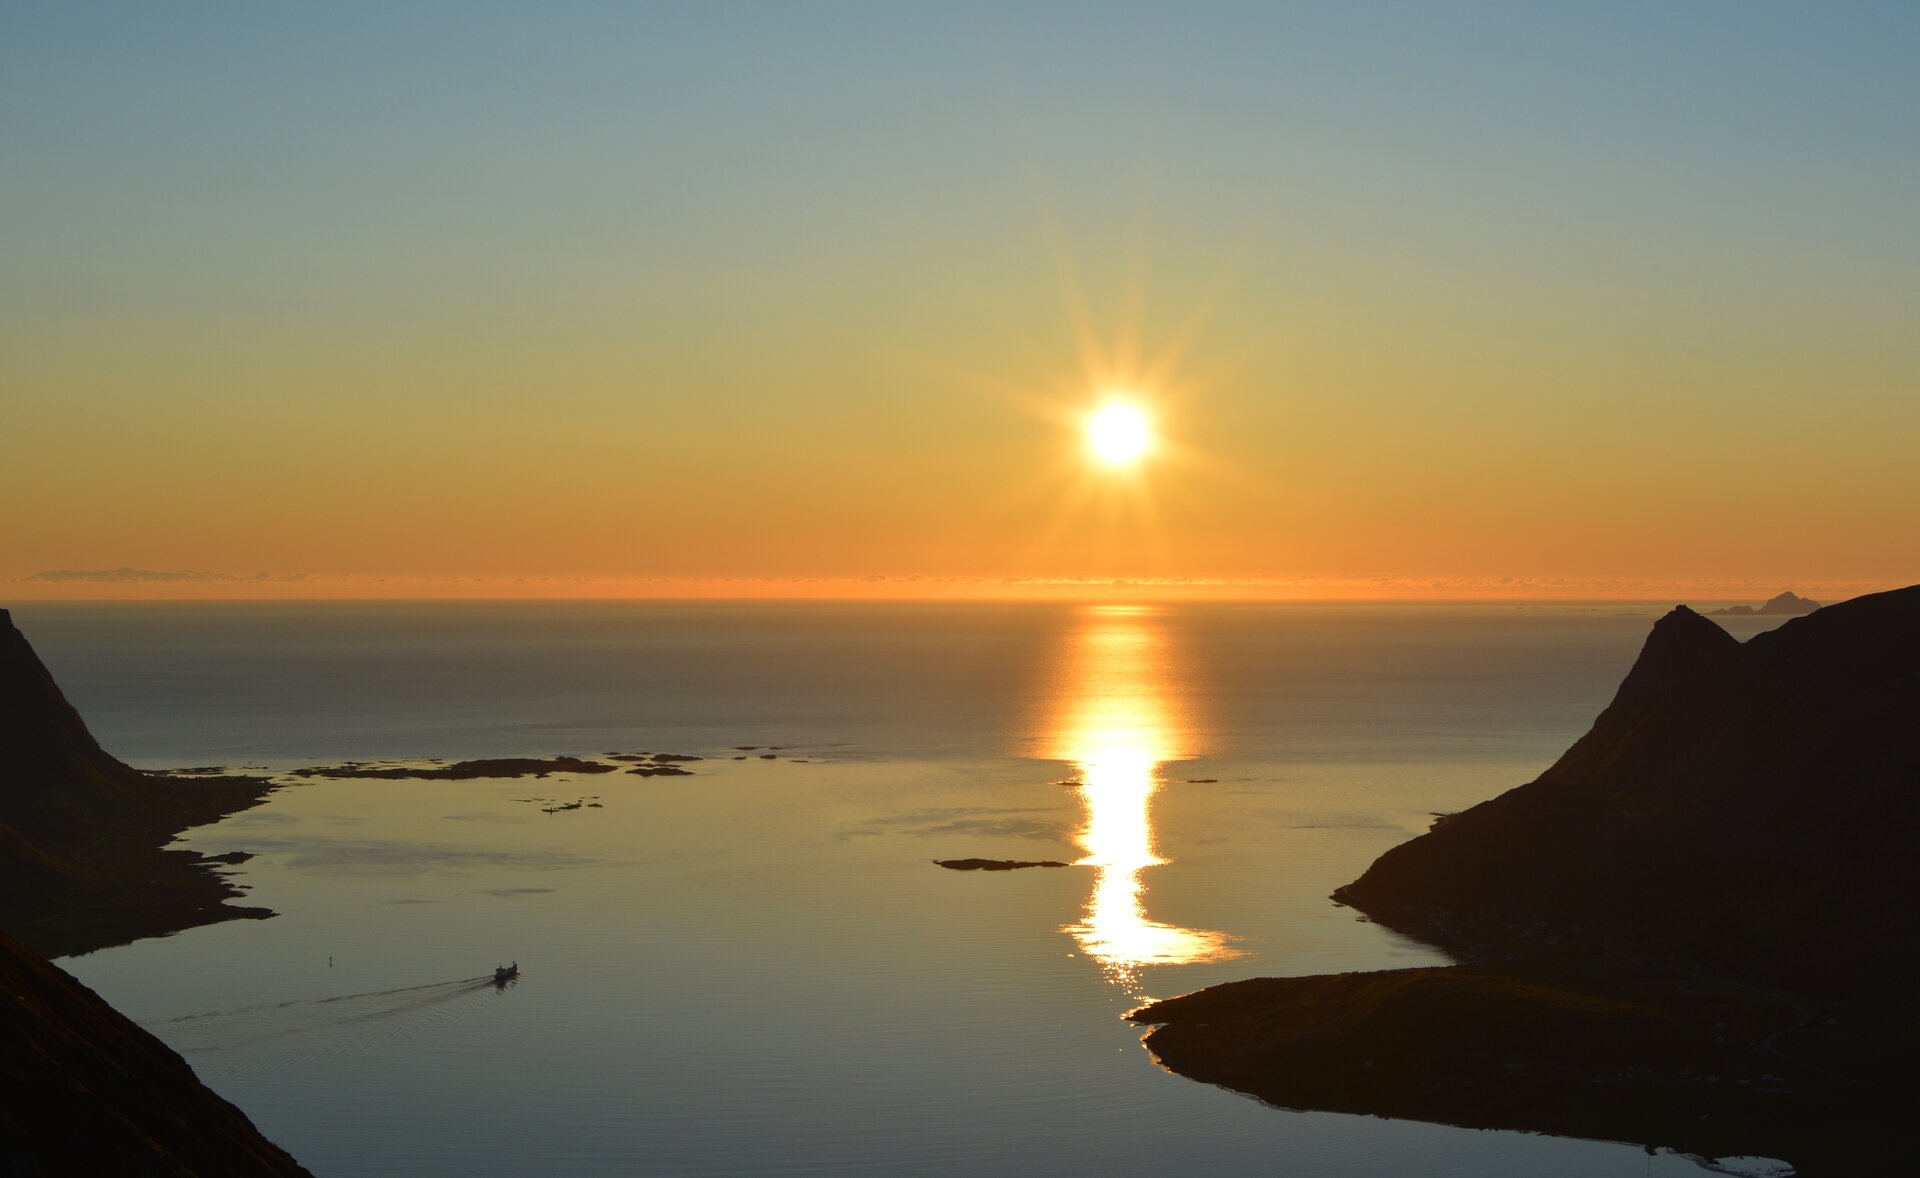 Top 10 Places To See The Midnight Sun In Lofoten Visit Lofoten